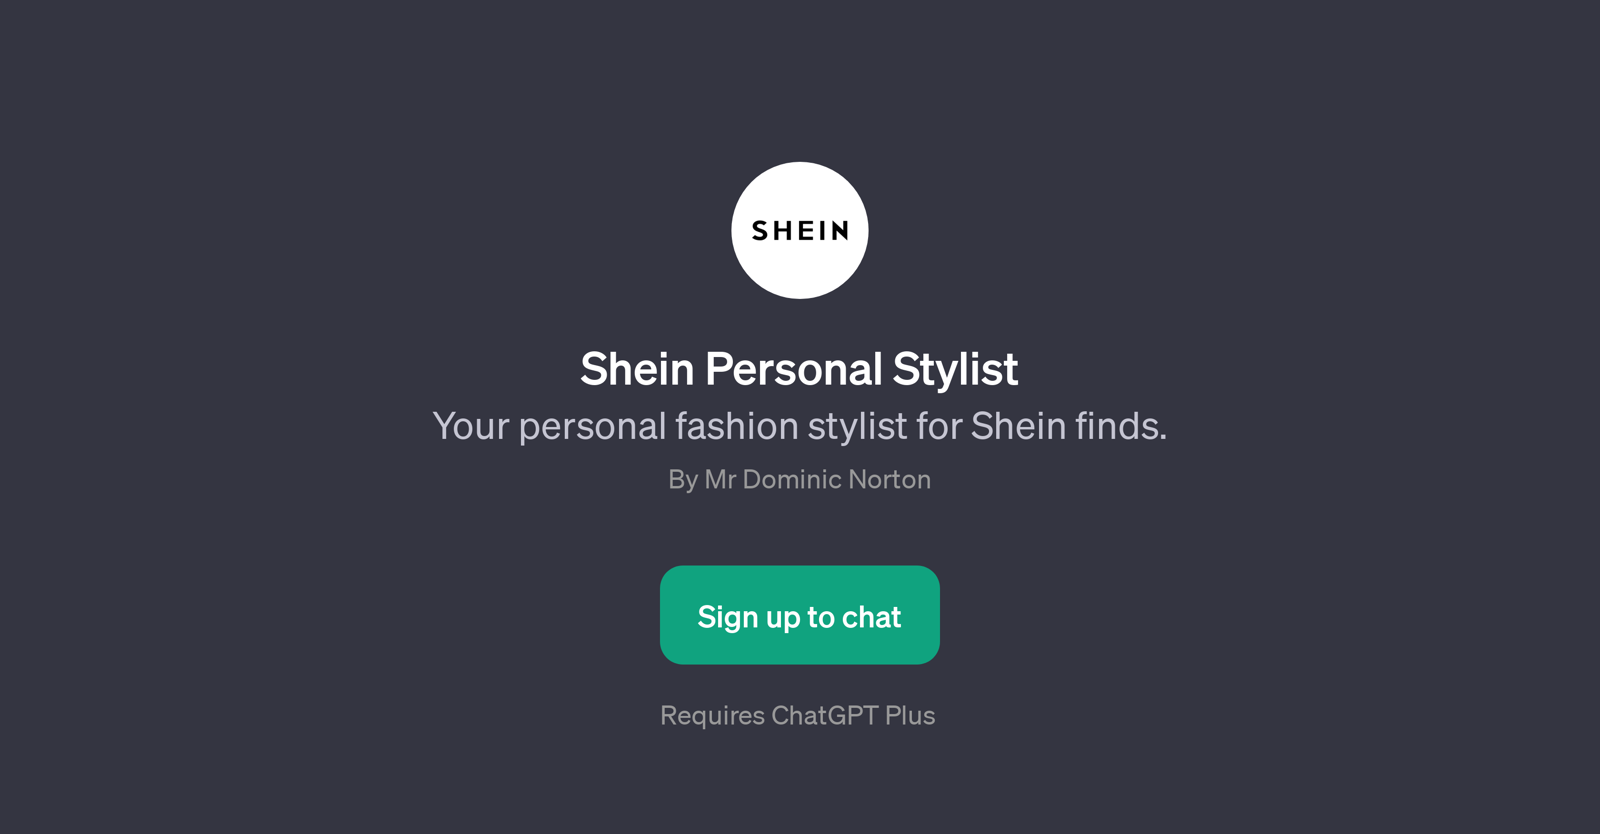 Shein Personal Stylist website